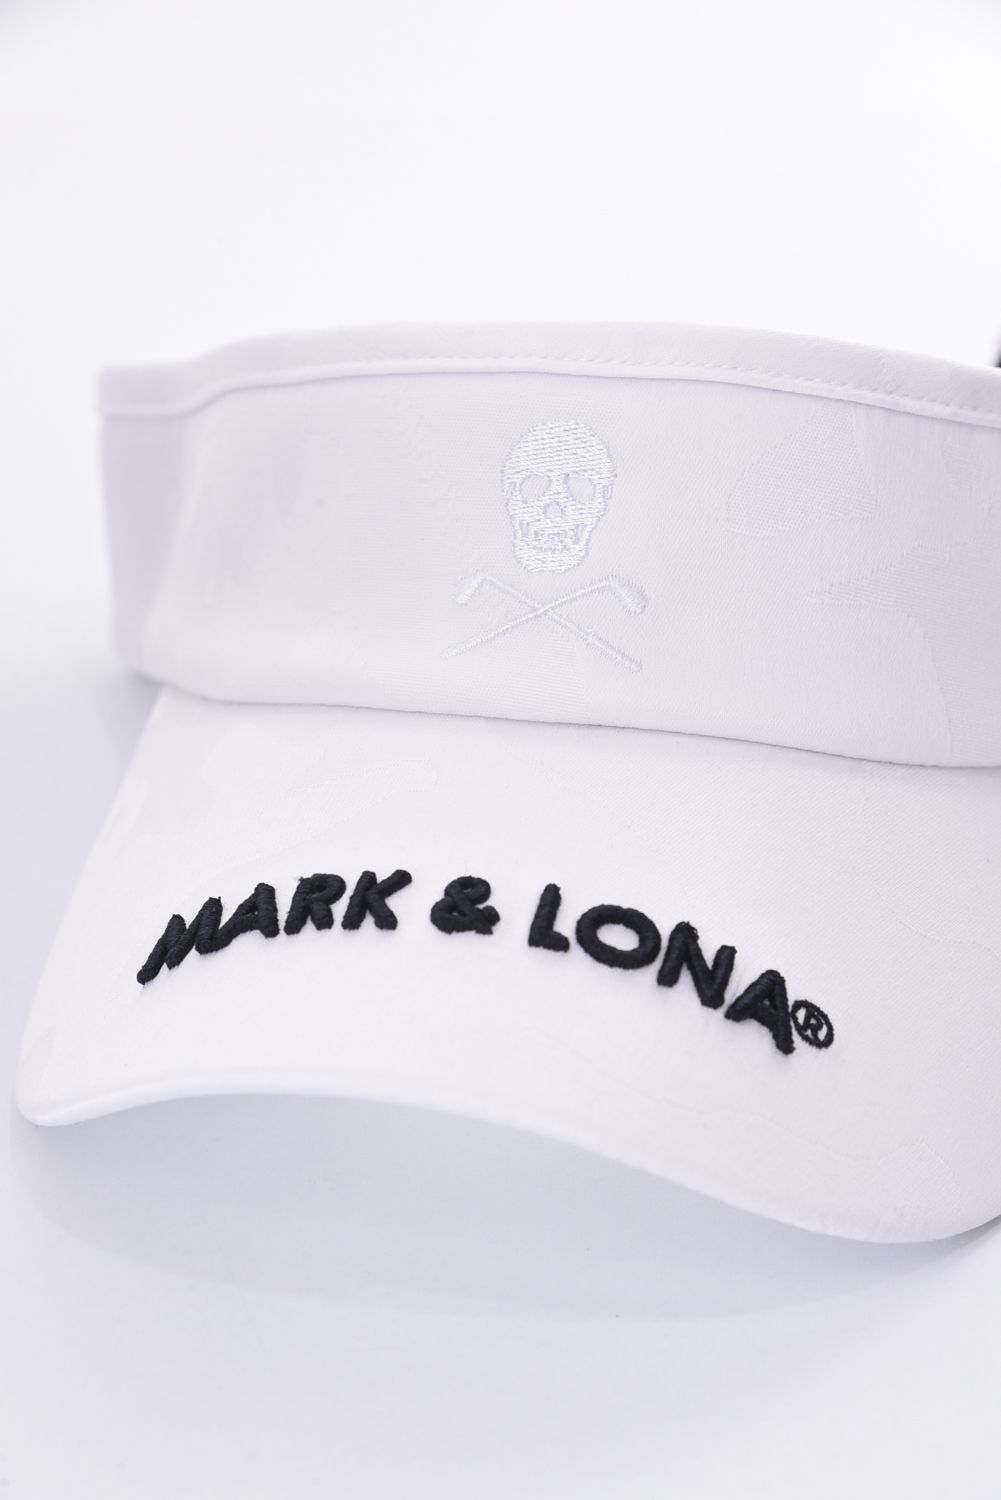 MARK&LONA - GAUGE NEO SUNVISOR / アイアンスカル オリジナル 